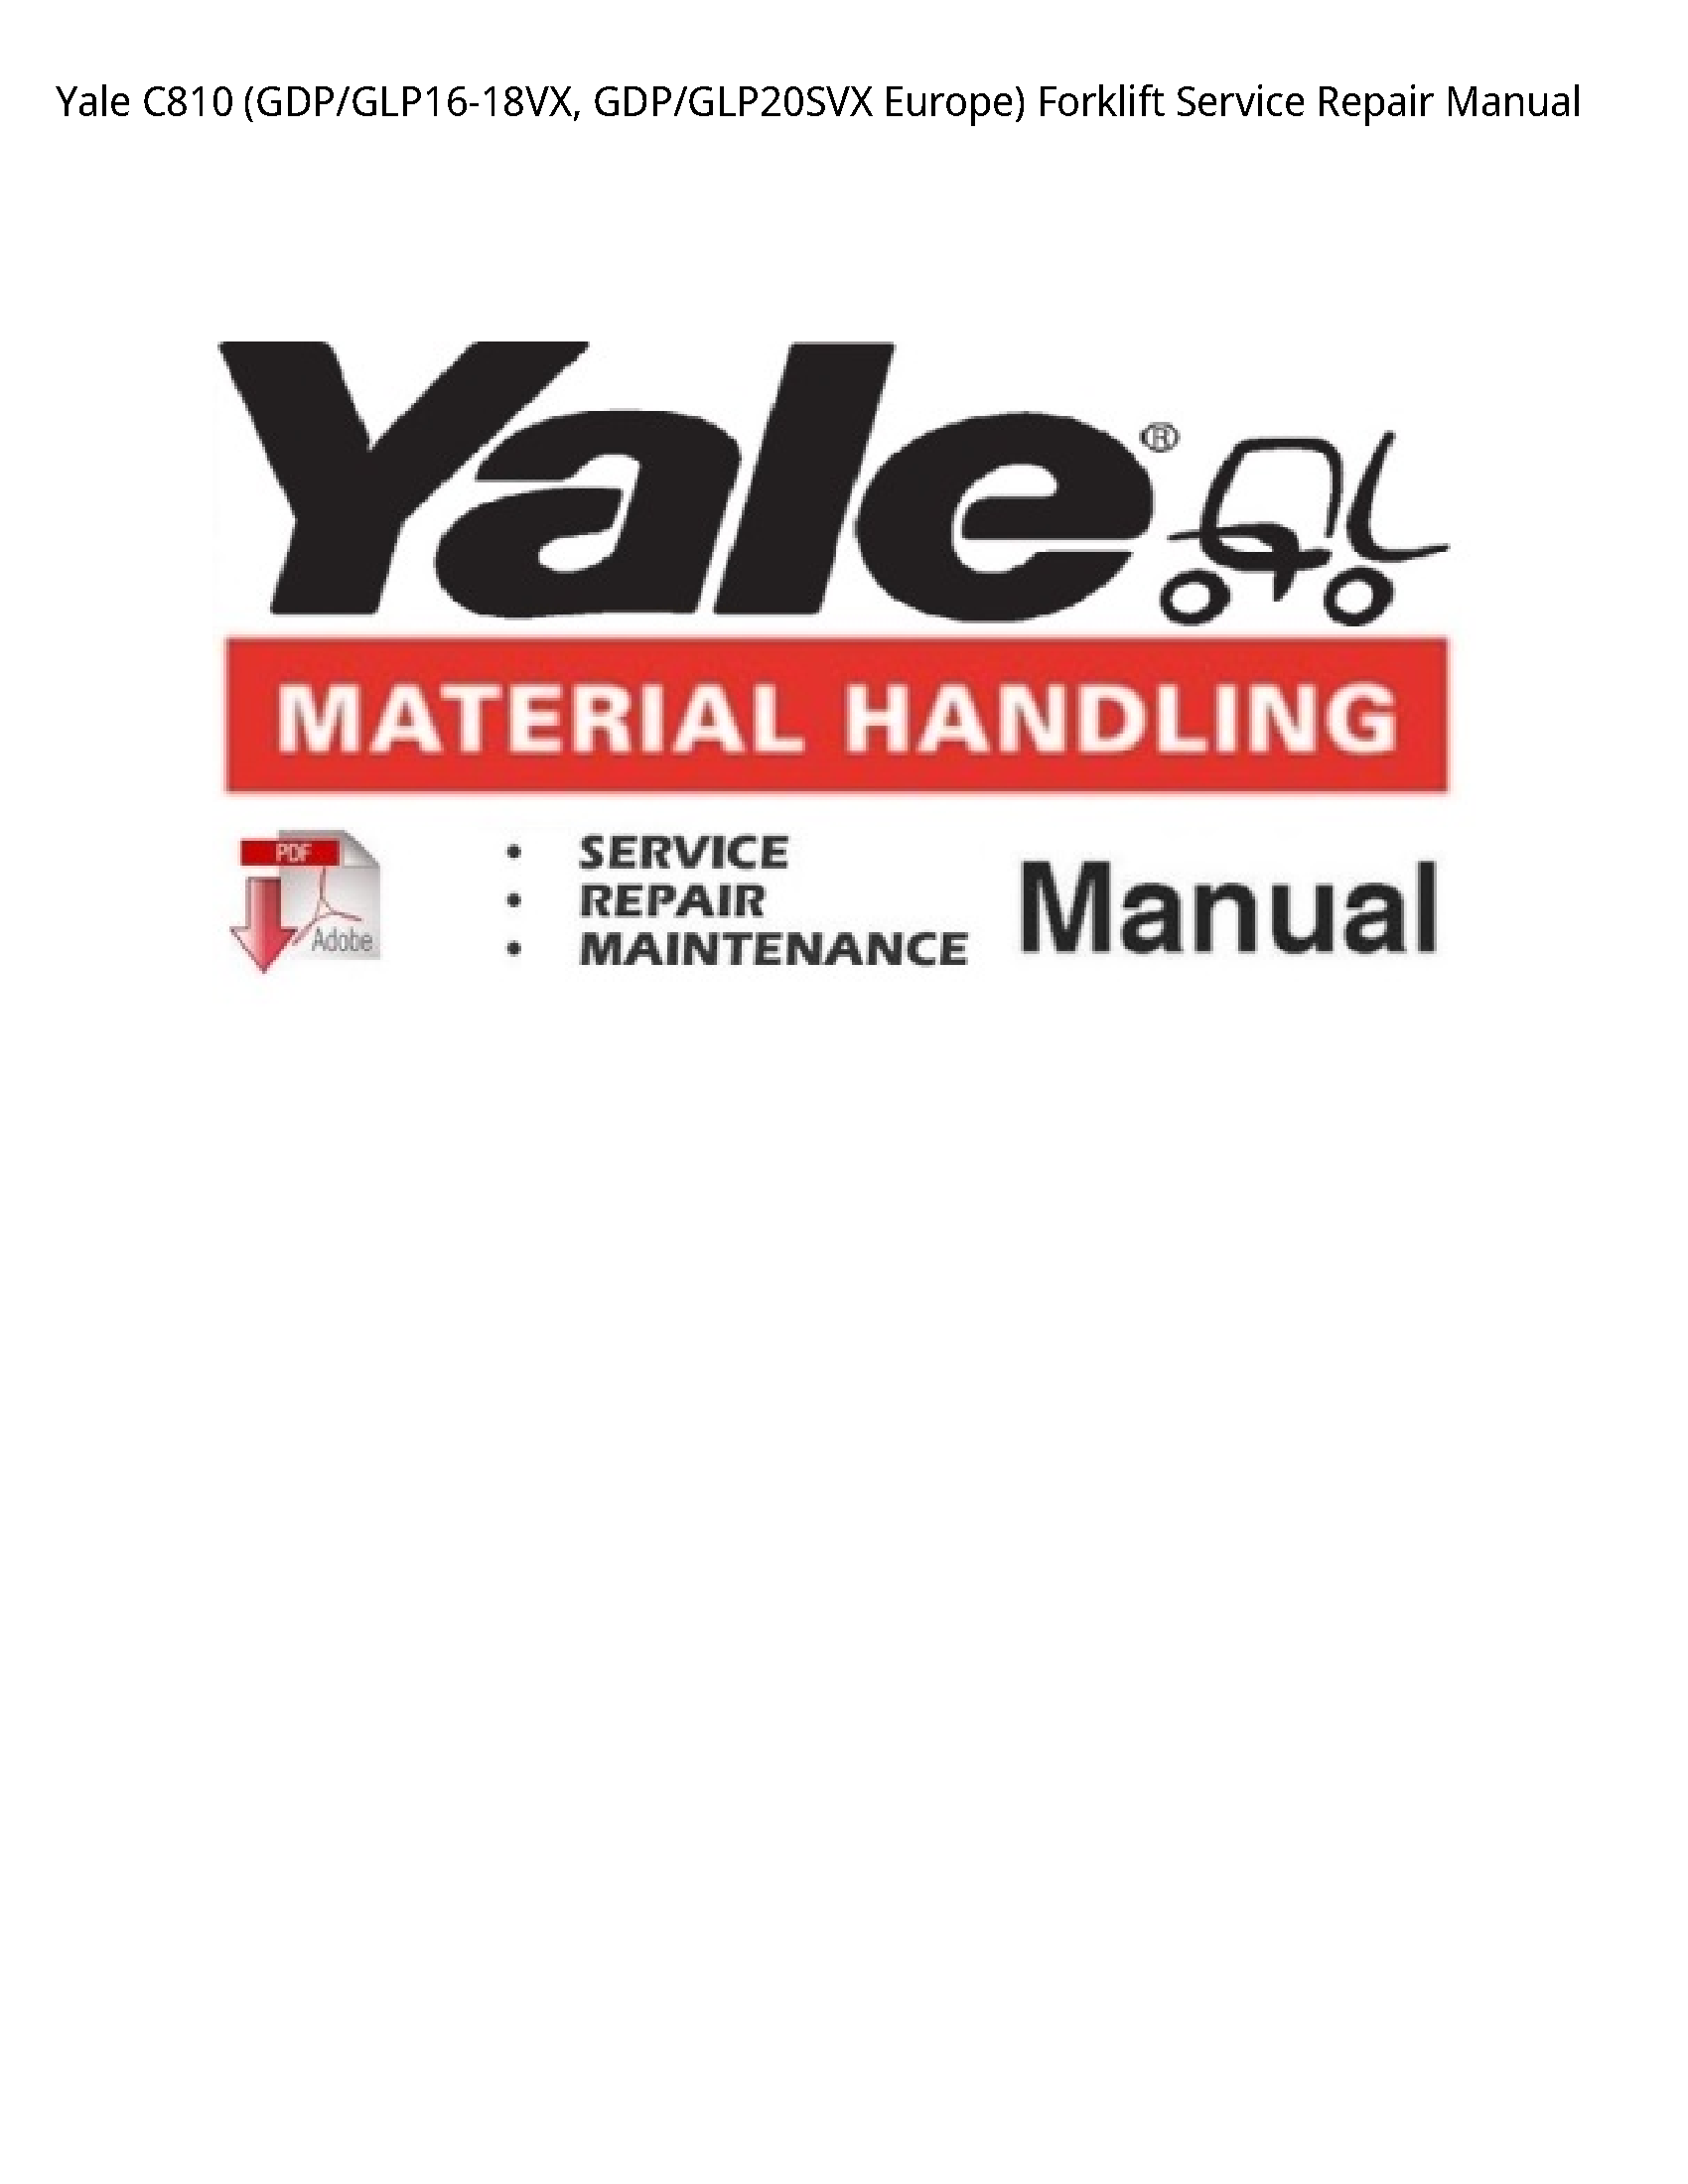 Yale C810 Europe) Forklift manual